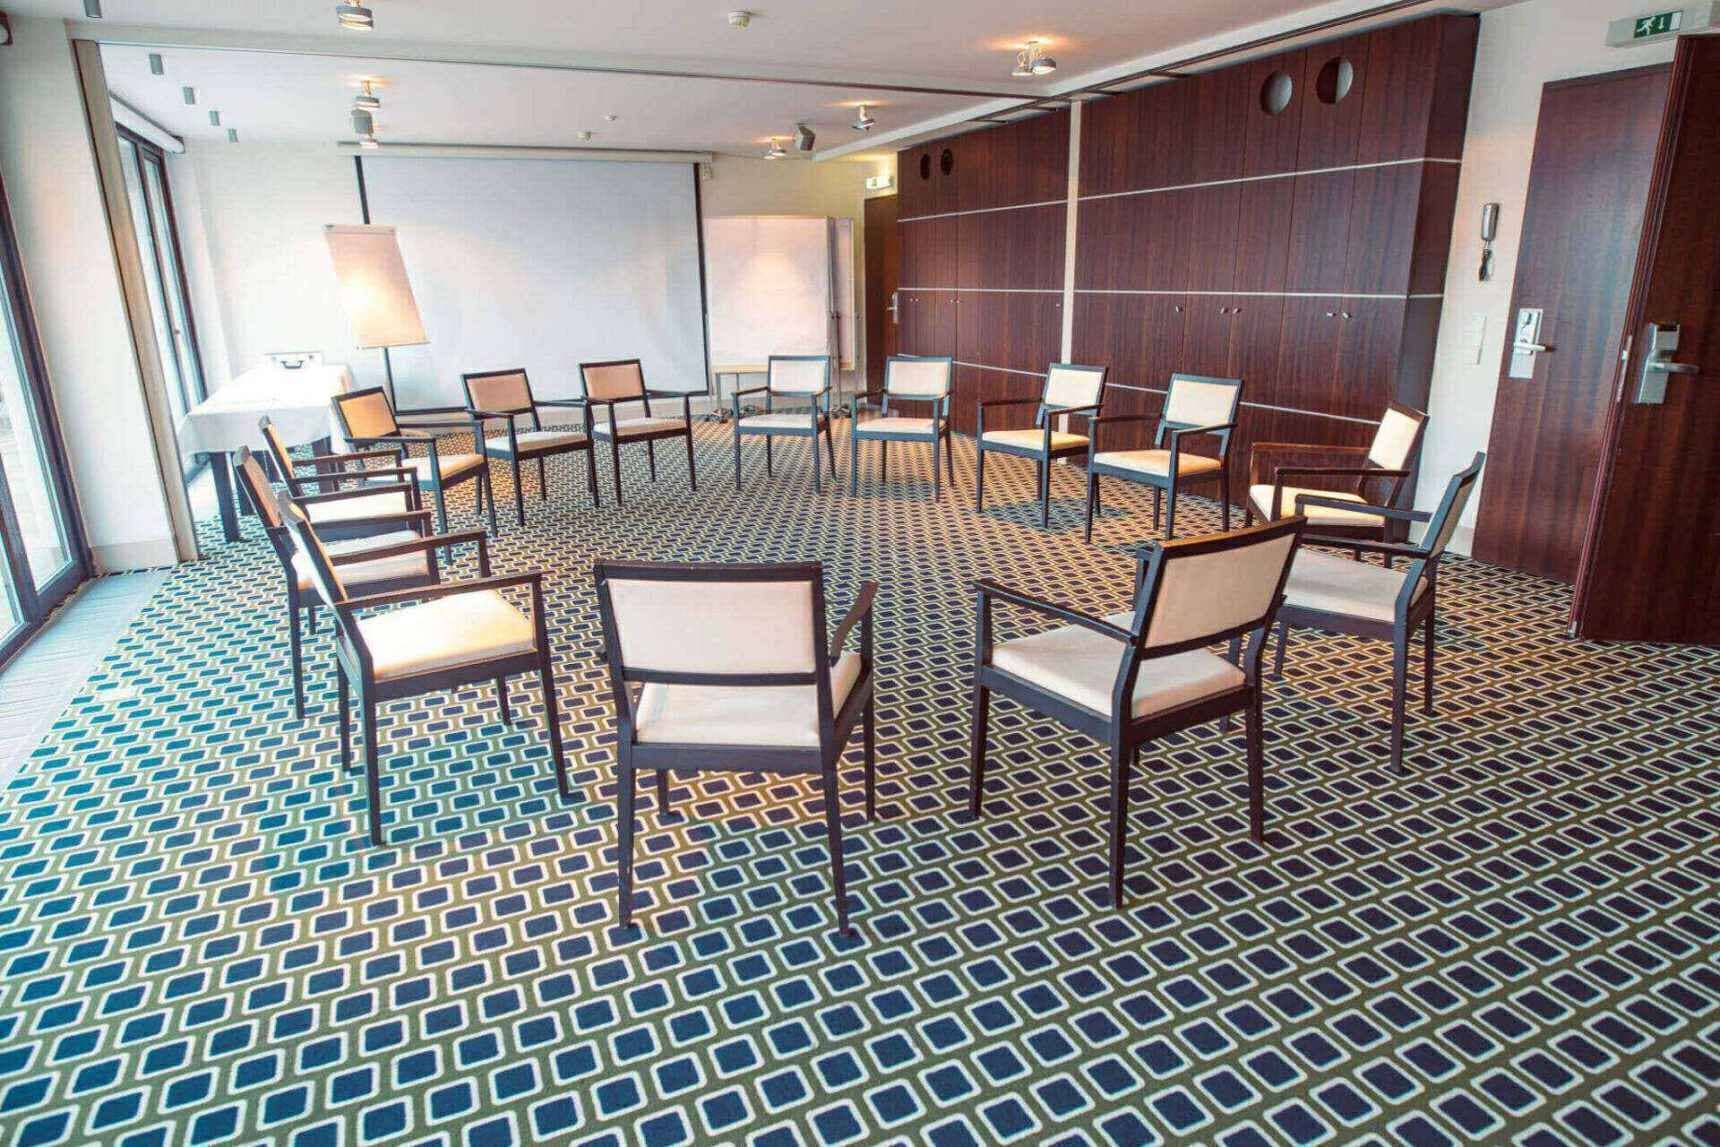 Meeting-rooms